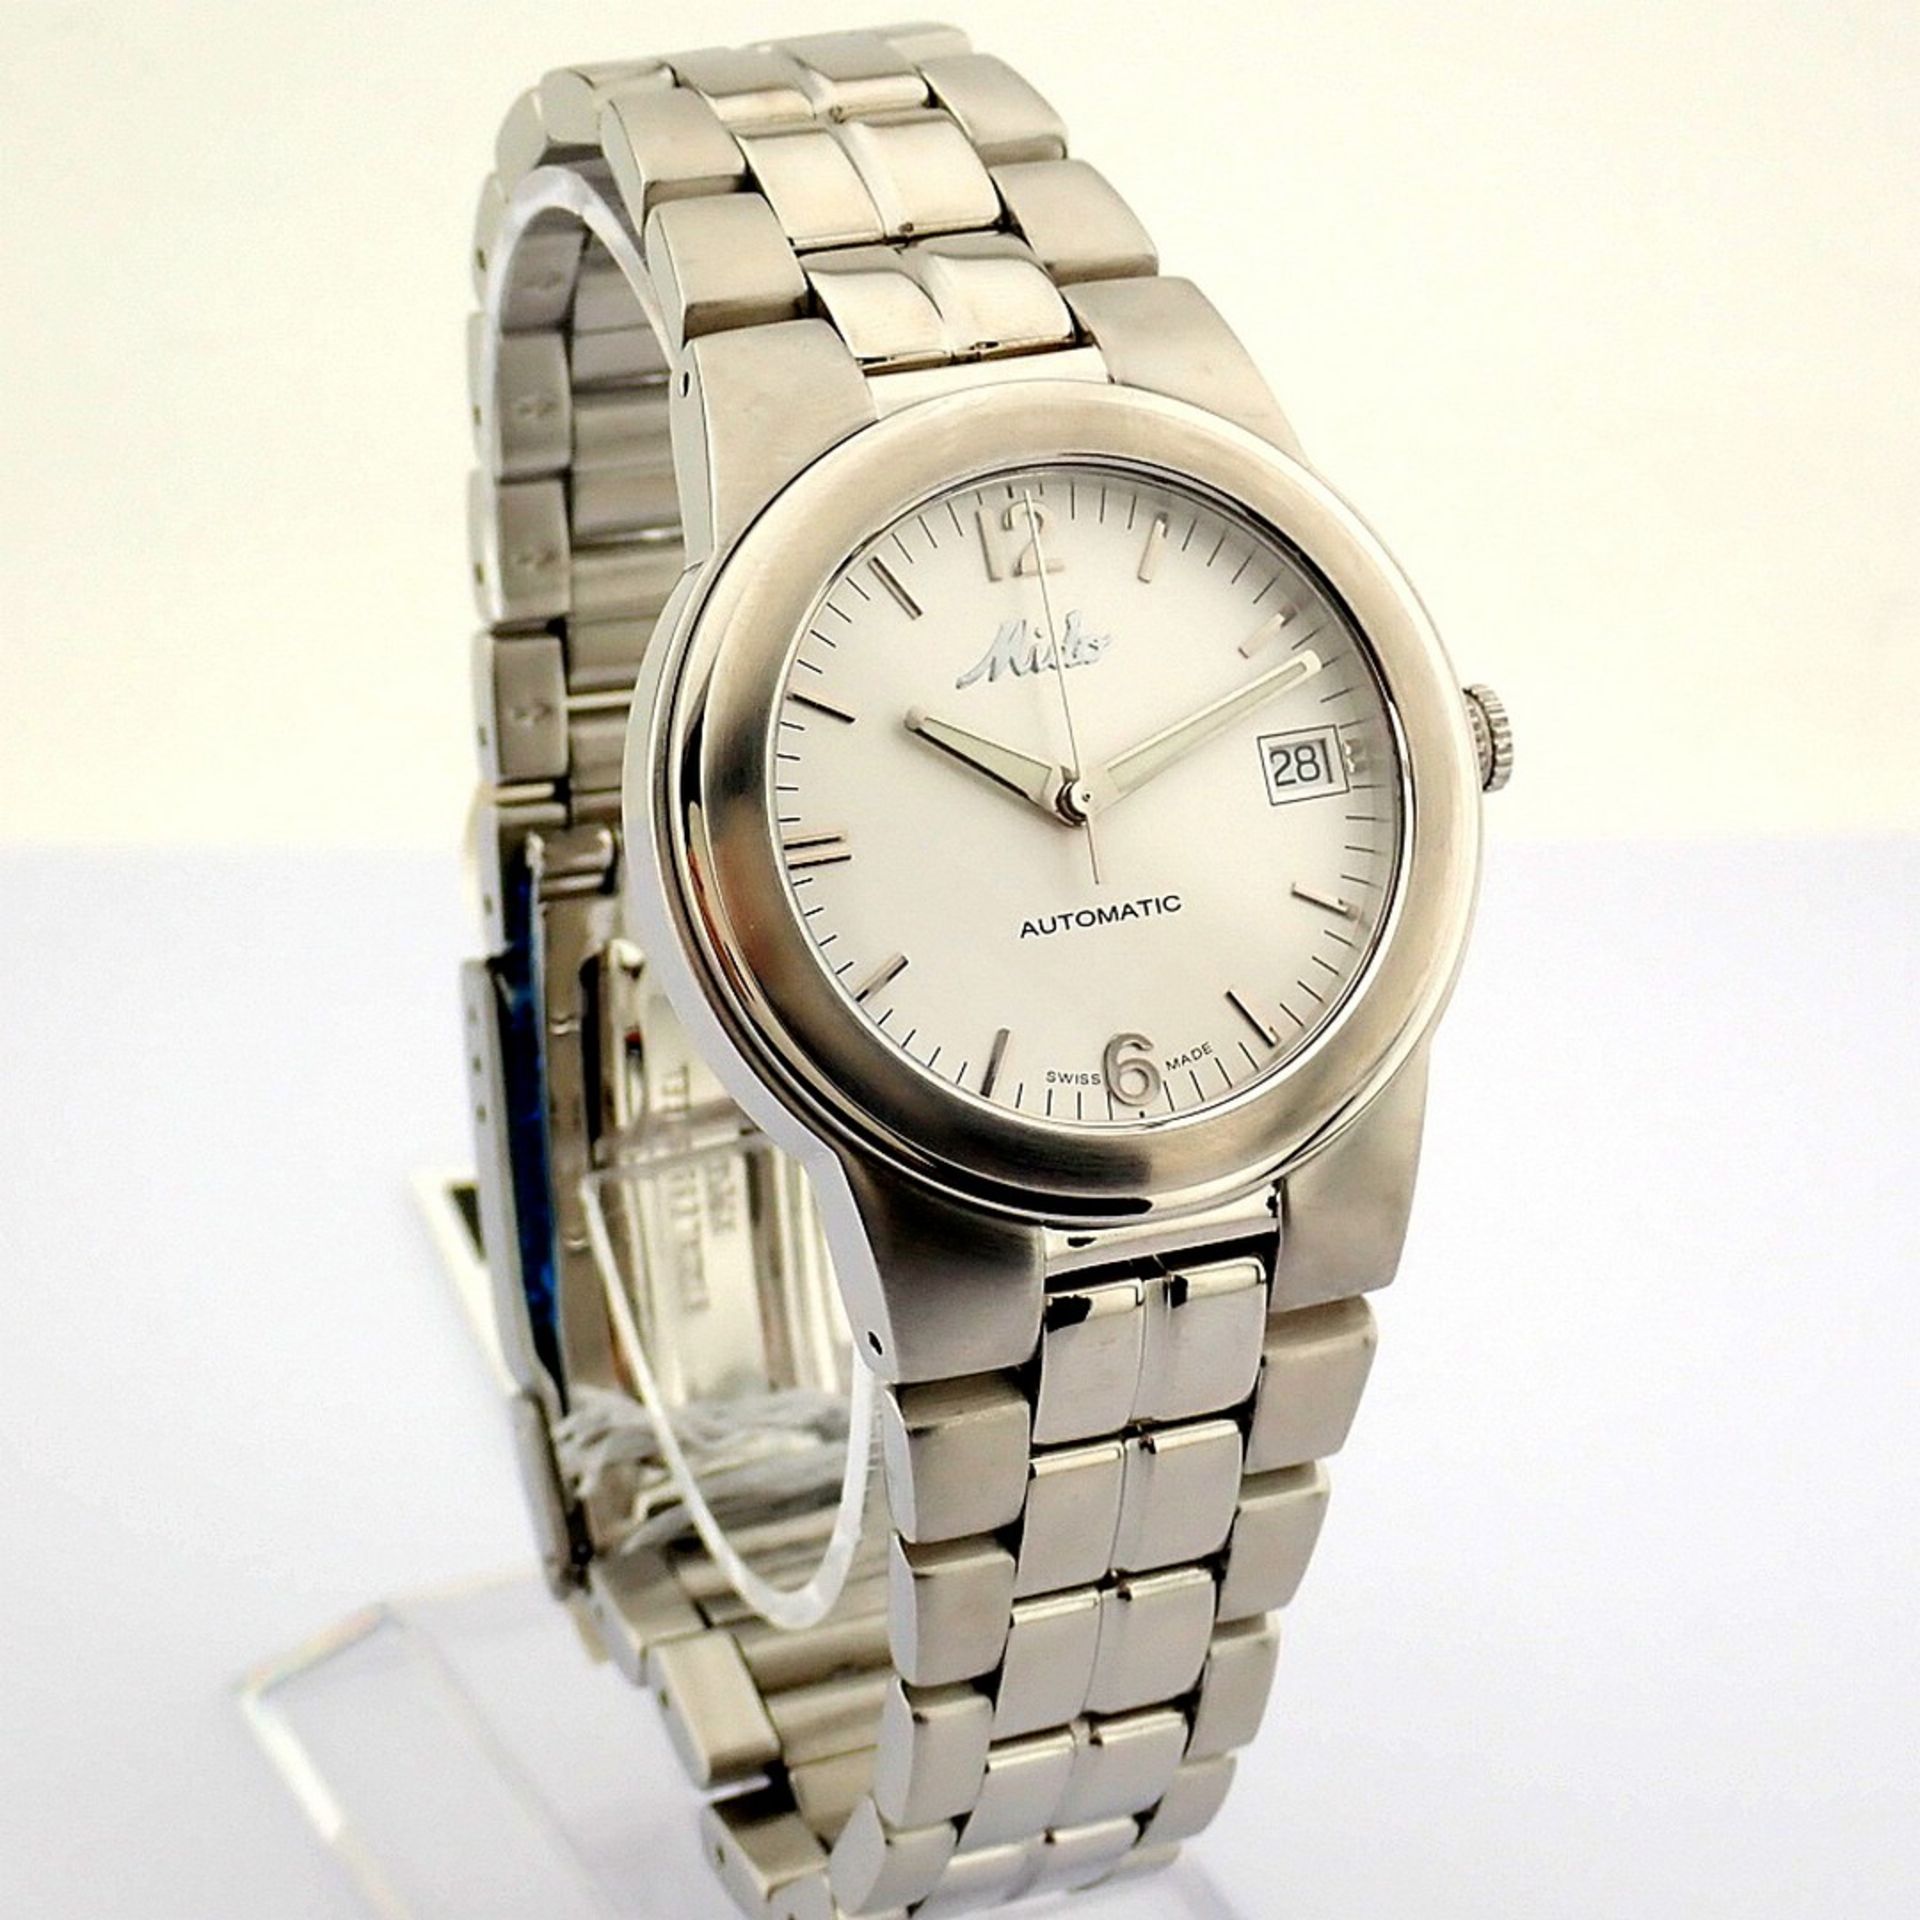 Mido / Ocean Star Aquadura (Brand new) - Gentlmen's Steel Wrist Watch - Image 9 of 12